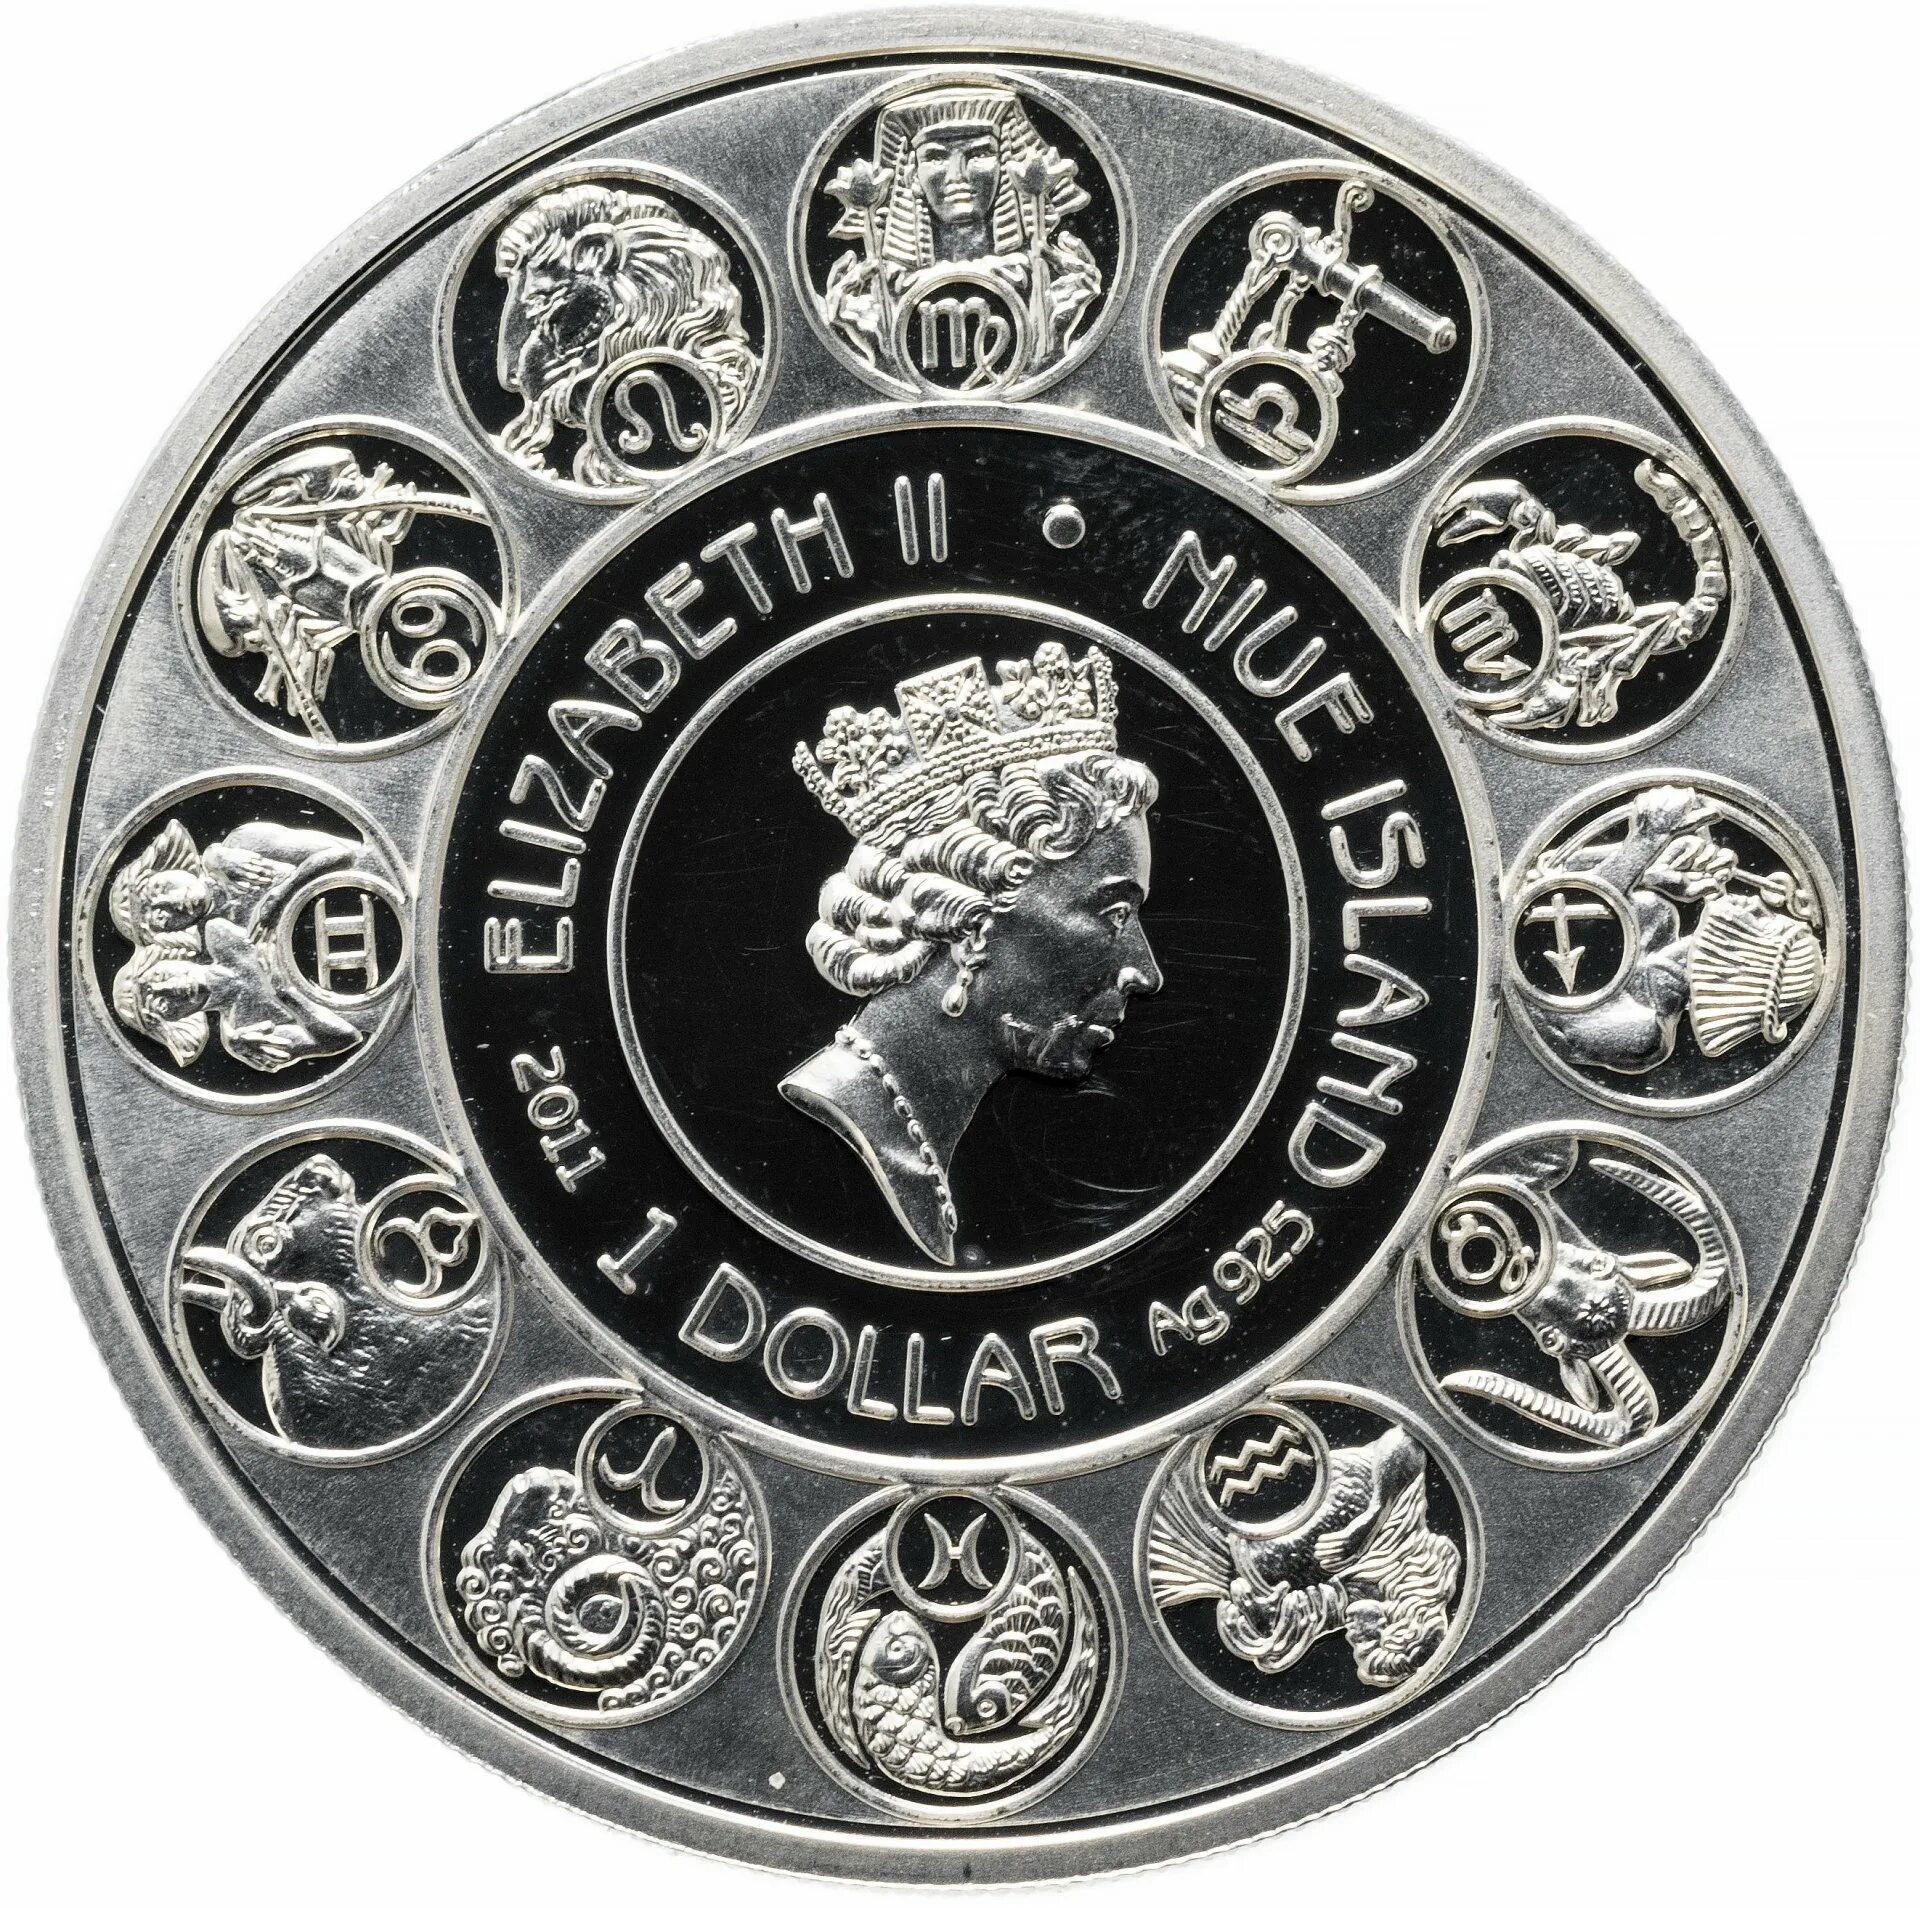 Ниуэ 1 доллар, 2010 знаки зодиака - Козерог. Монеты серебро острова Ниуэ. Монеты знаки зодиака. Ниуэ 1 доллар, 2014 знаки зодиака.